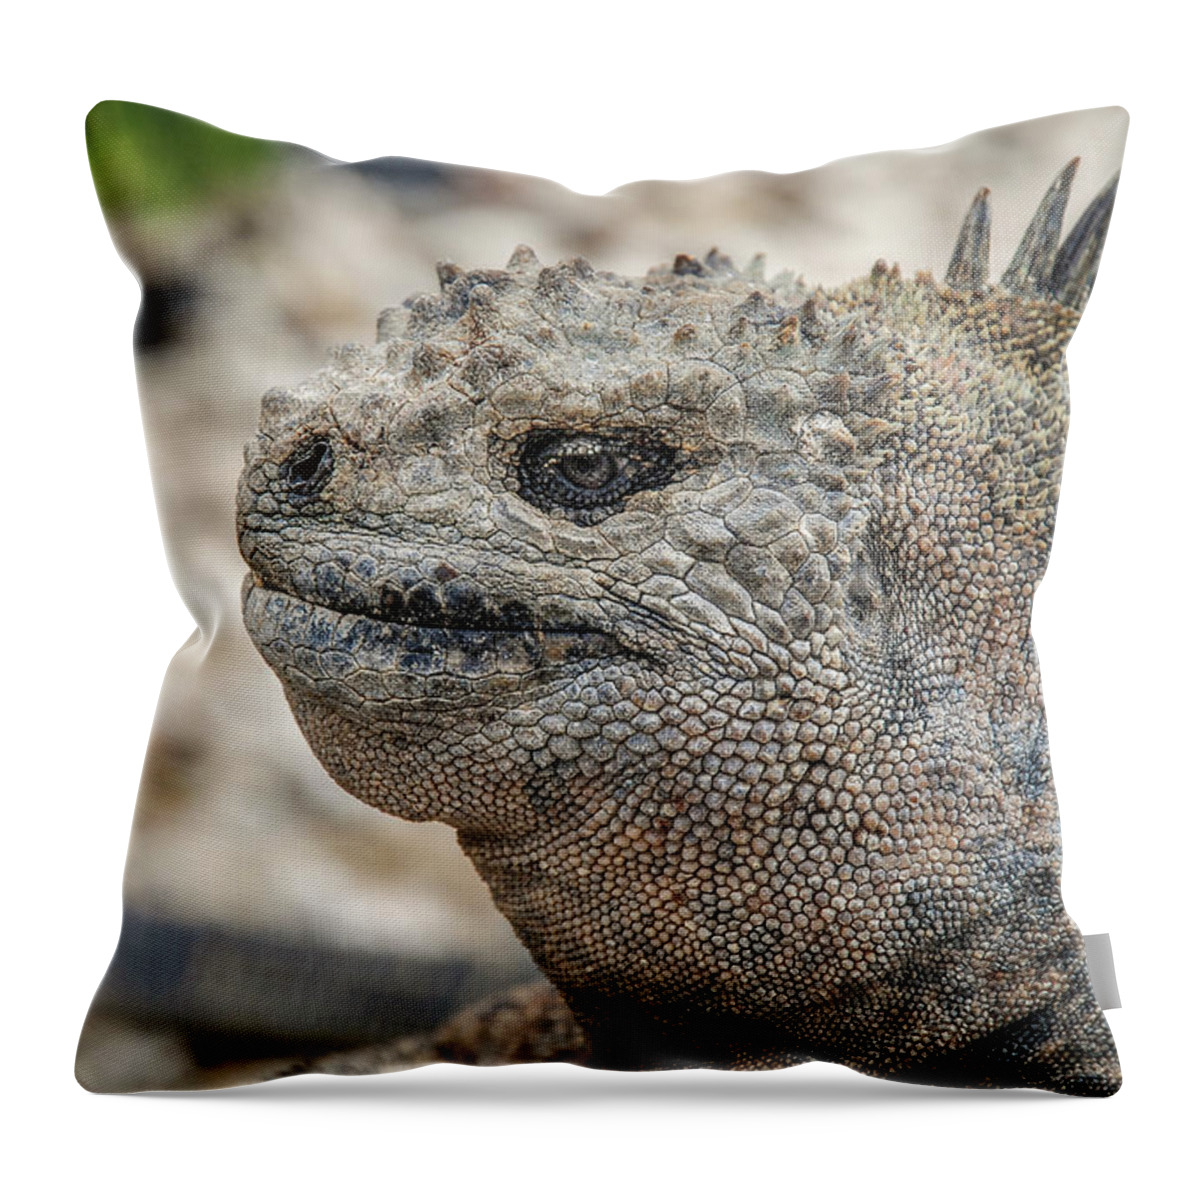 Ecuador Throw Pillow featuring the photograph Marine Iguana close-up by Henri Leduc